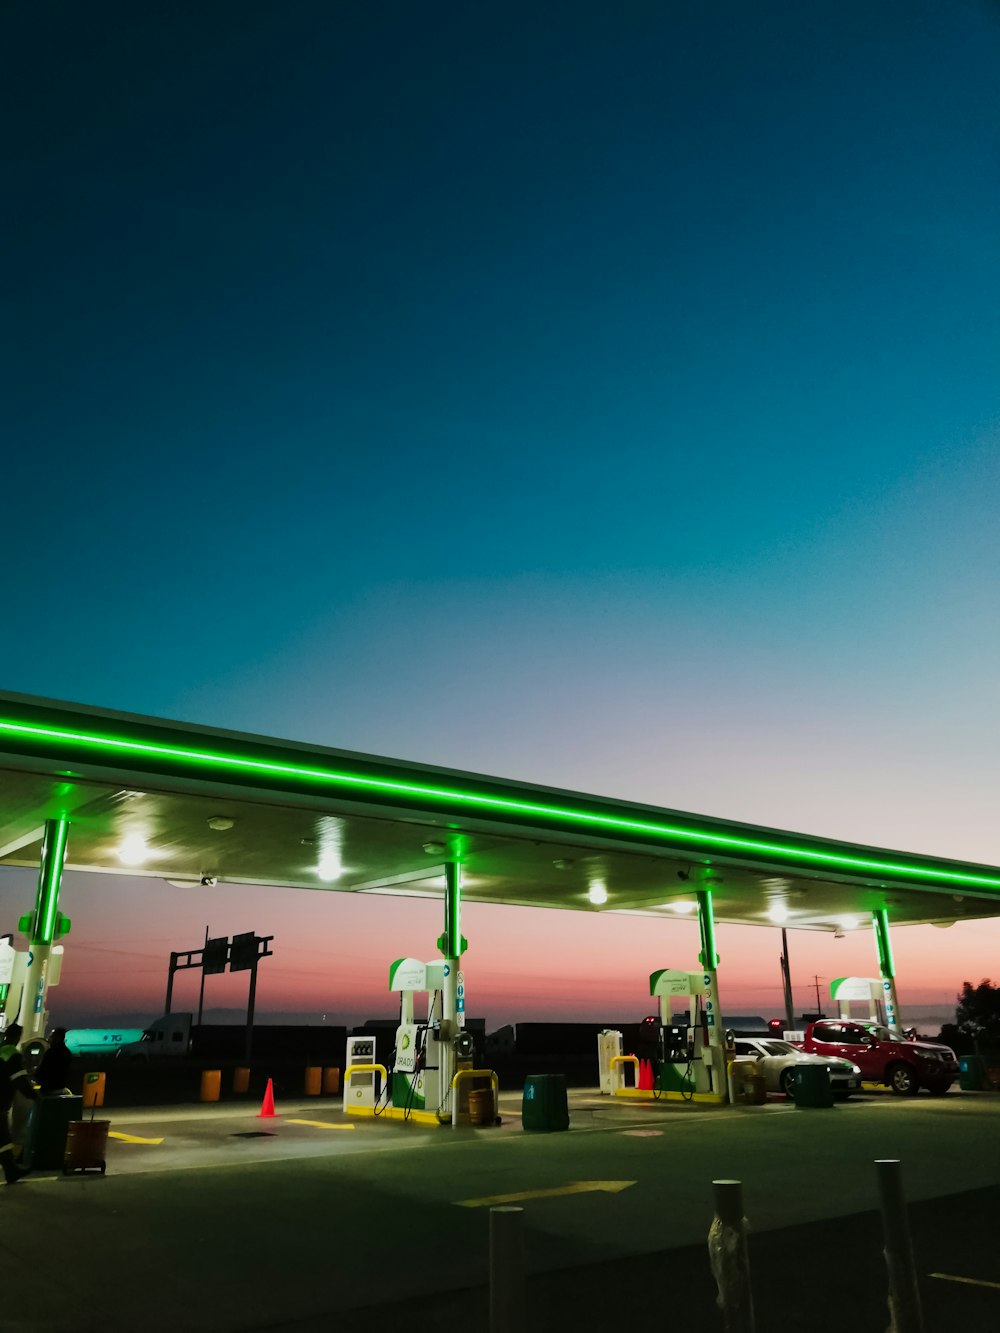 lighted gasoline station at night